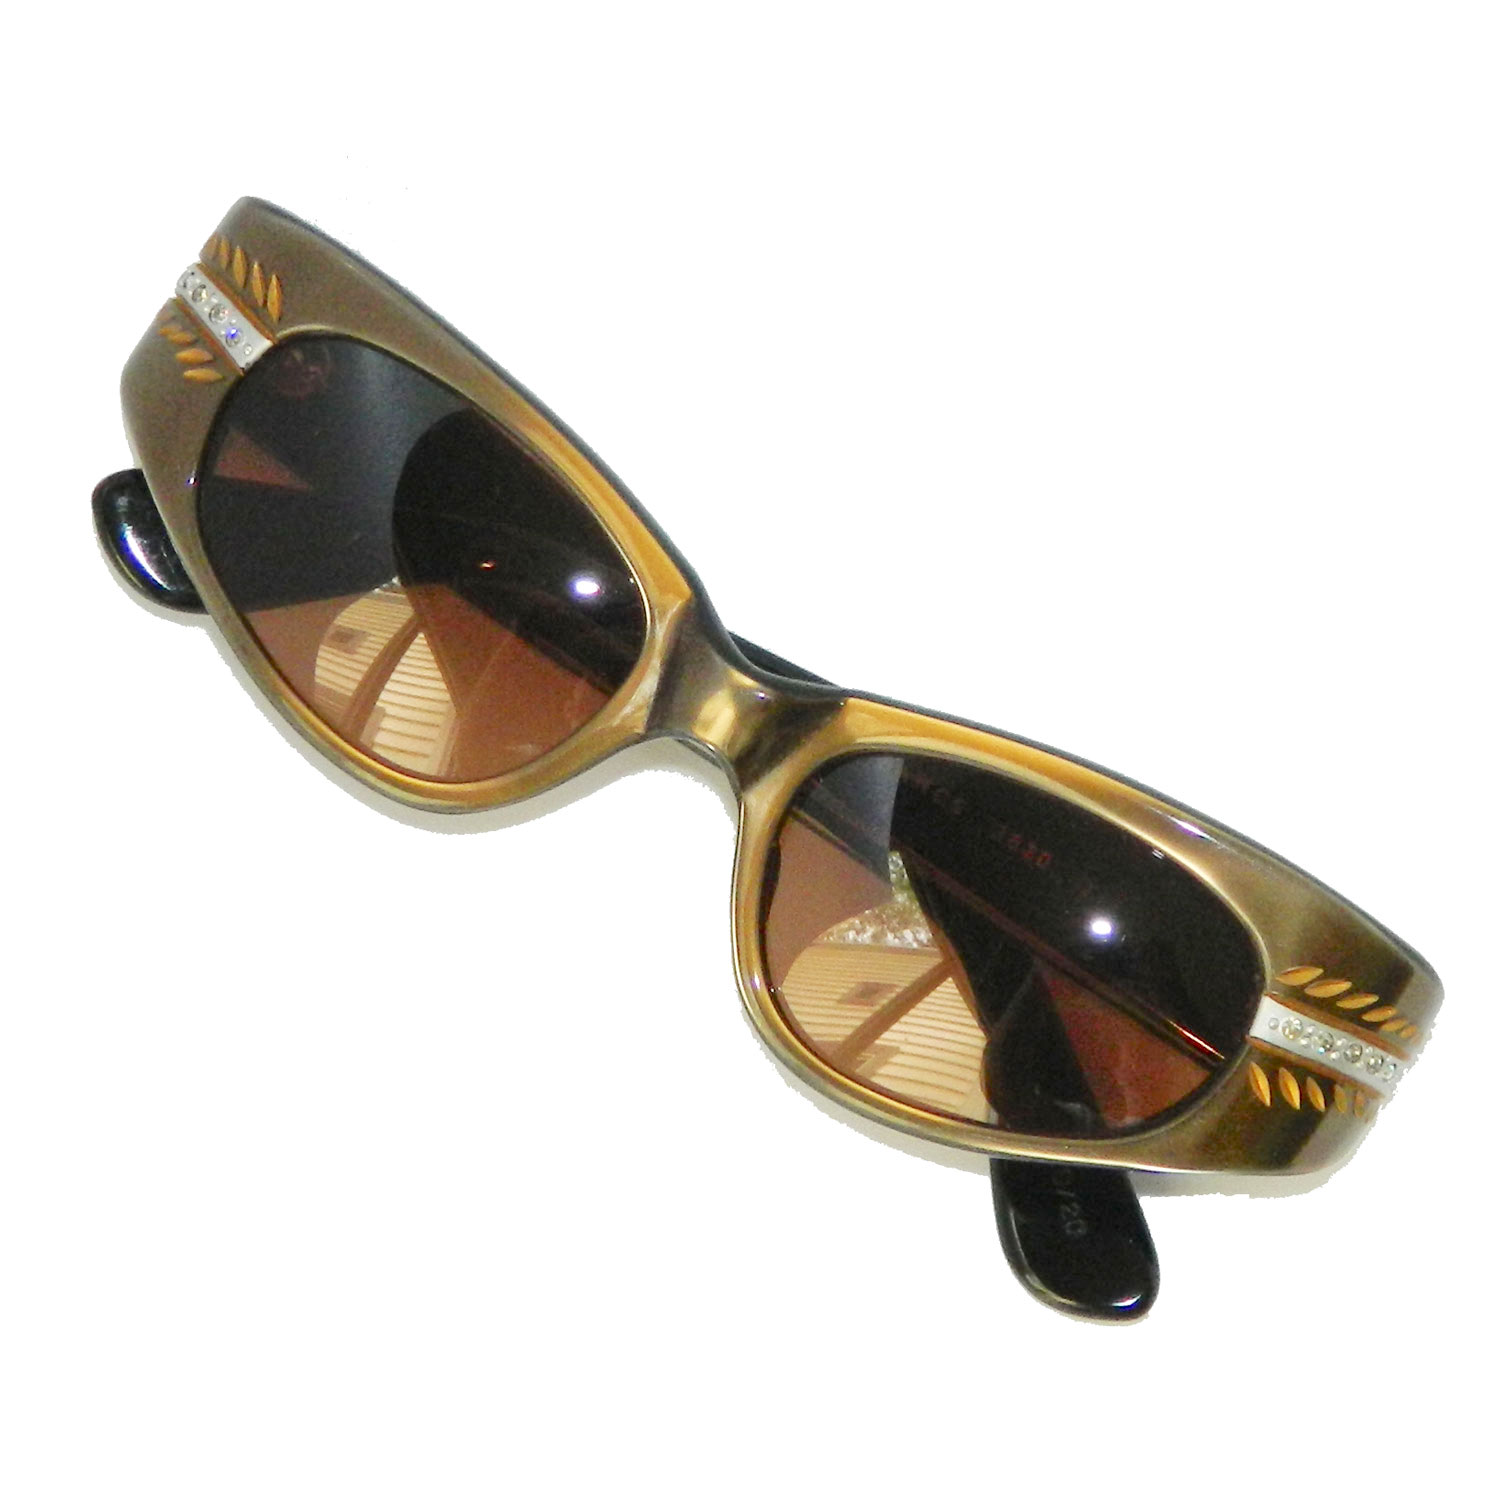 Rhinestone studded cat eye sunglasses